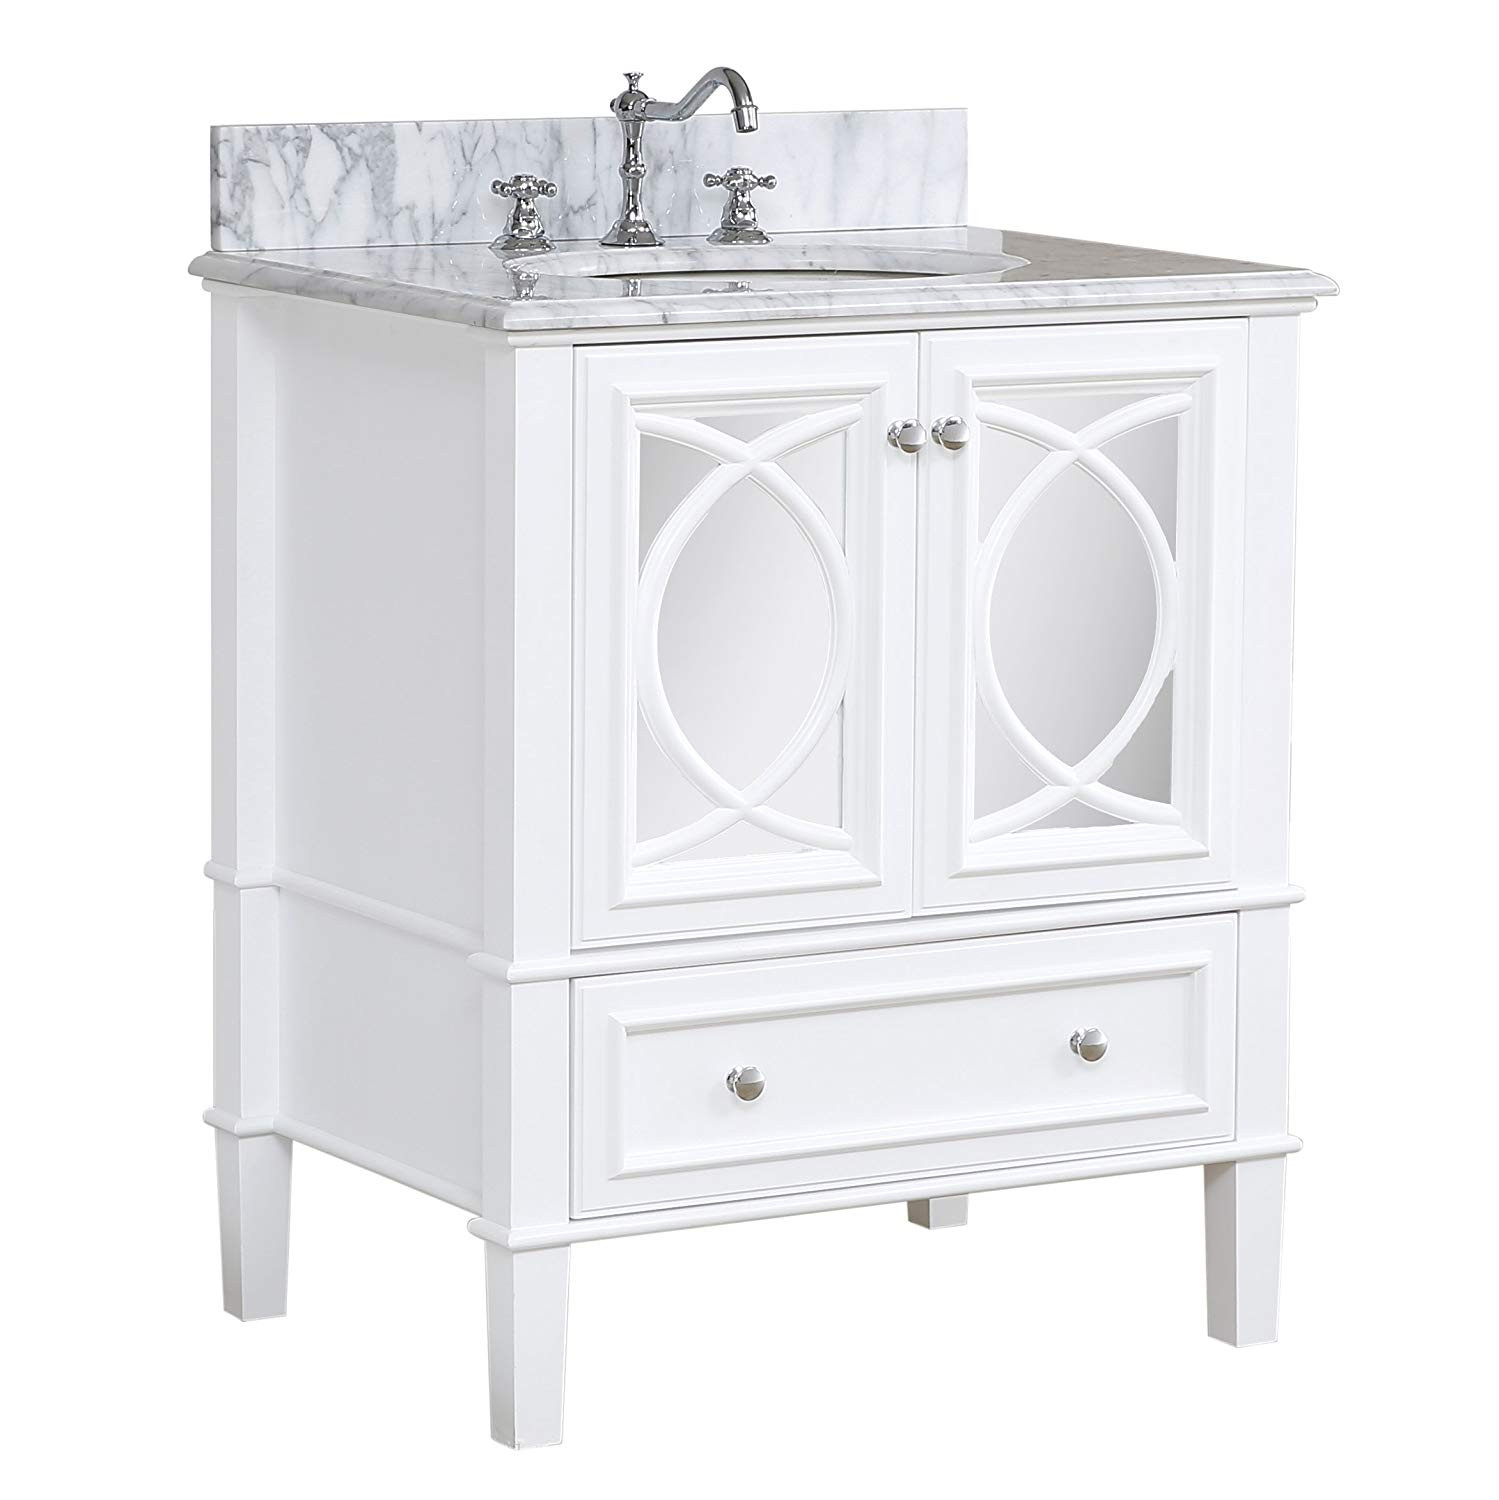 30 Bathroom Vanity with Sink and Drawers Best Of Olivia 30 Inch Bathroom Vanity Carrara White Includes Italian